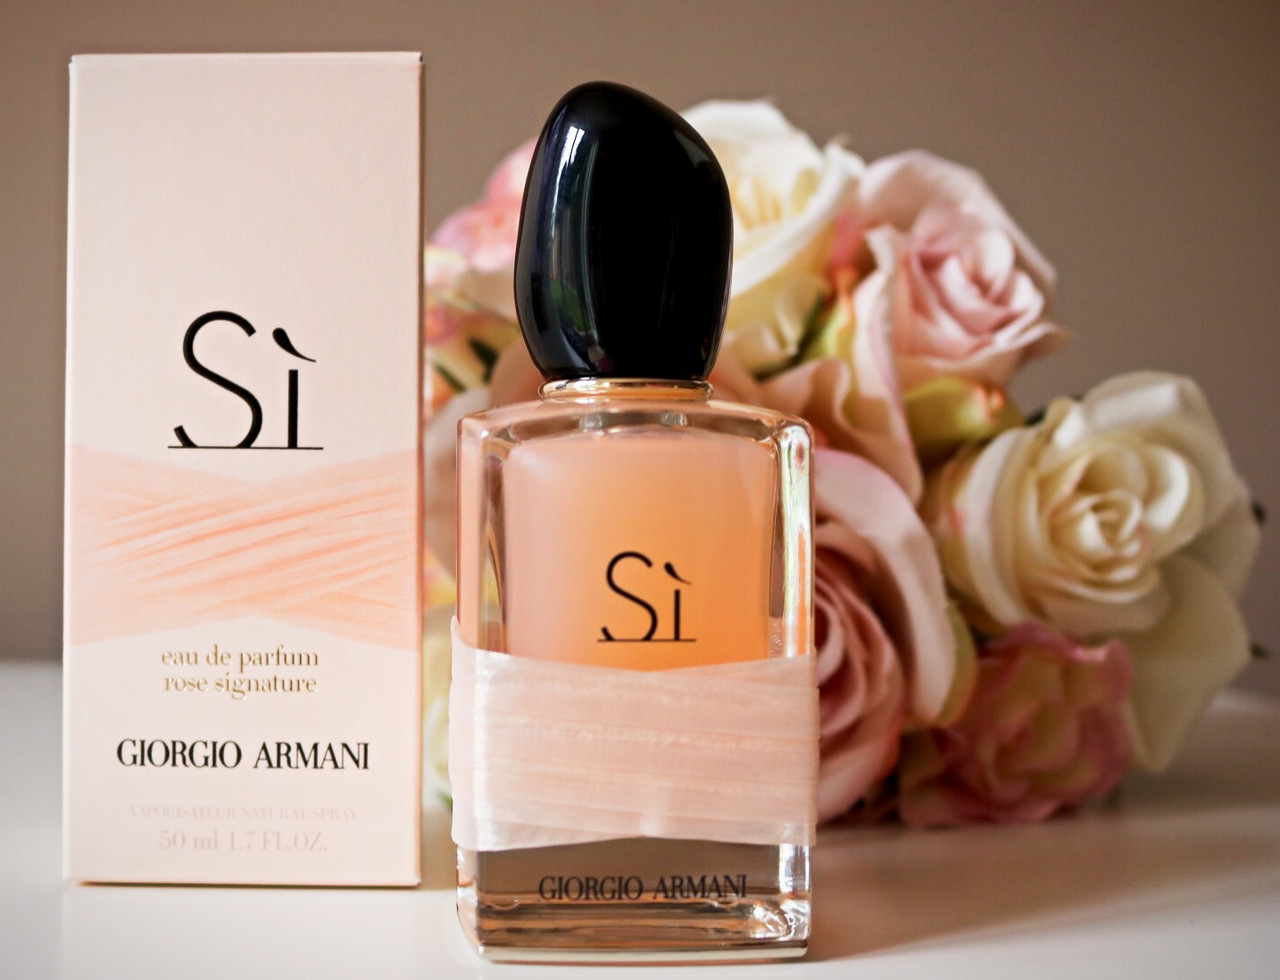 Armani Rose Signature Perfume Finland, SAVE 40% - www.fourwoodcapital.com